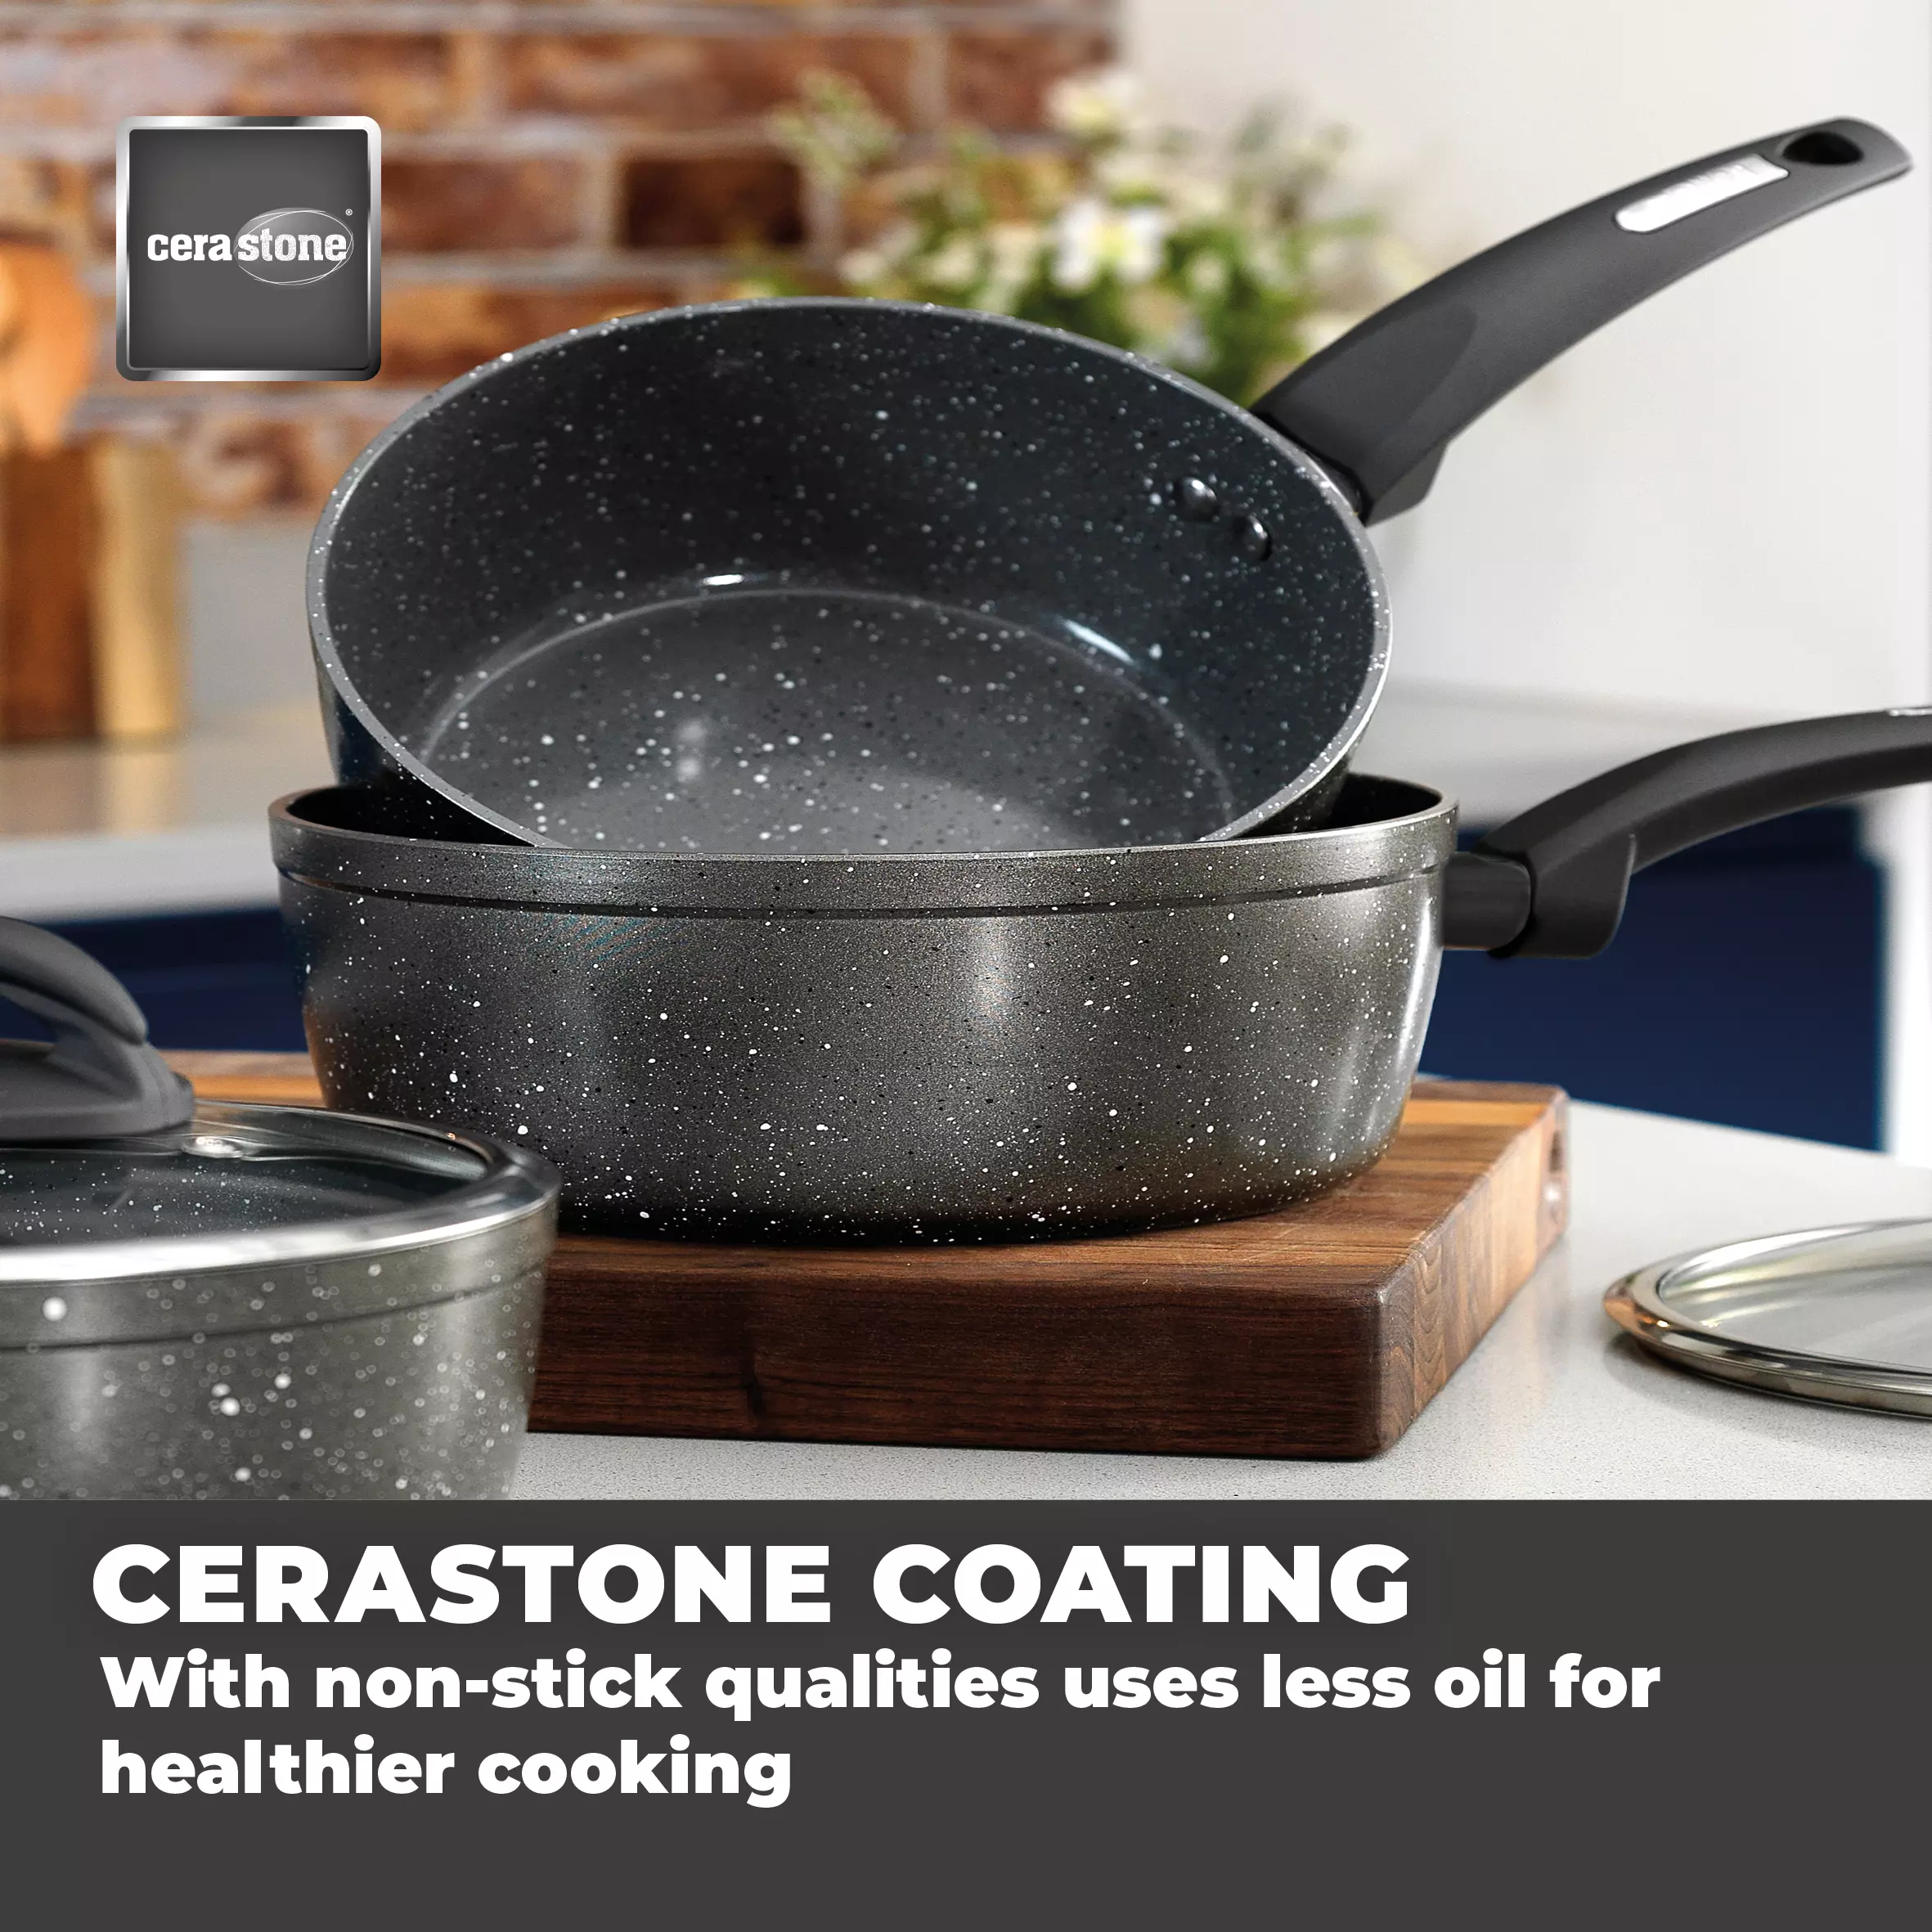 Graphite 3 Piece Tower Cerastone Forged aluminium Saucepan Set with Easy Clean Non-Stick Ceramic Coating 